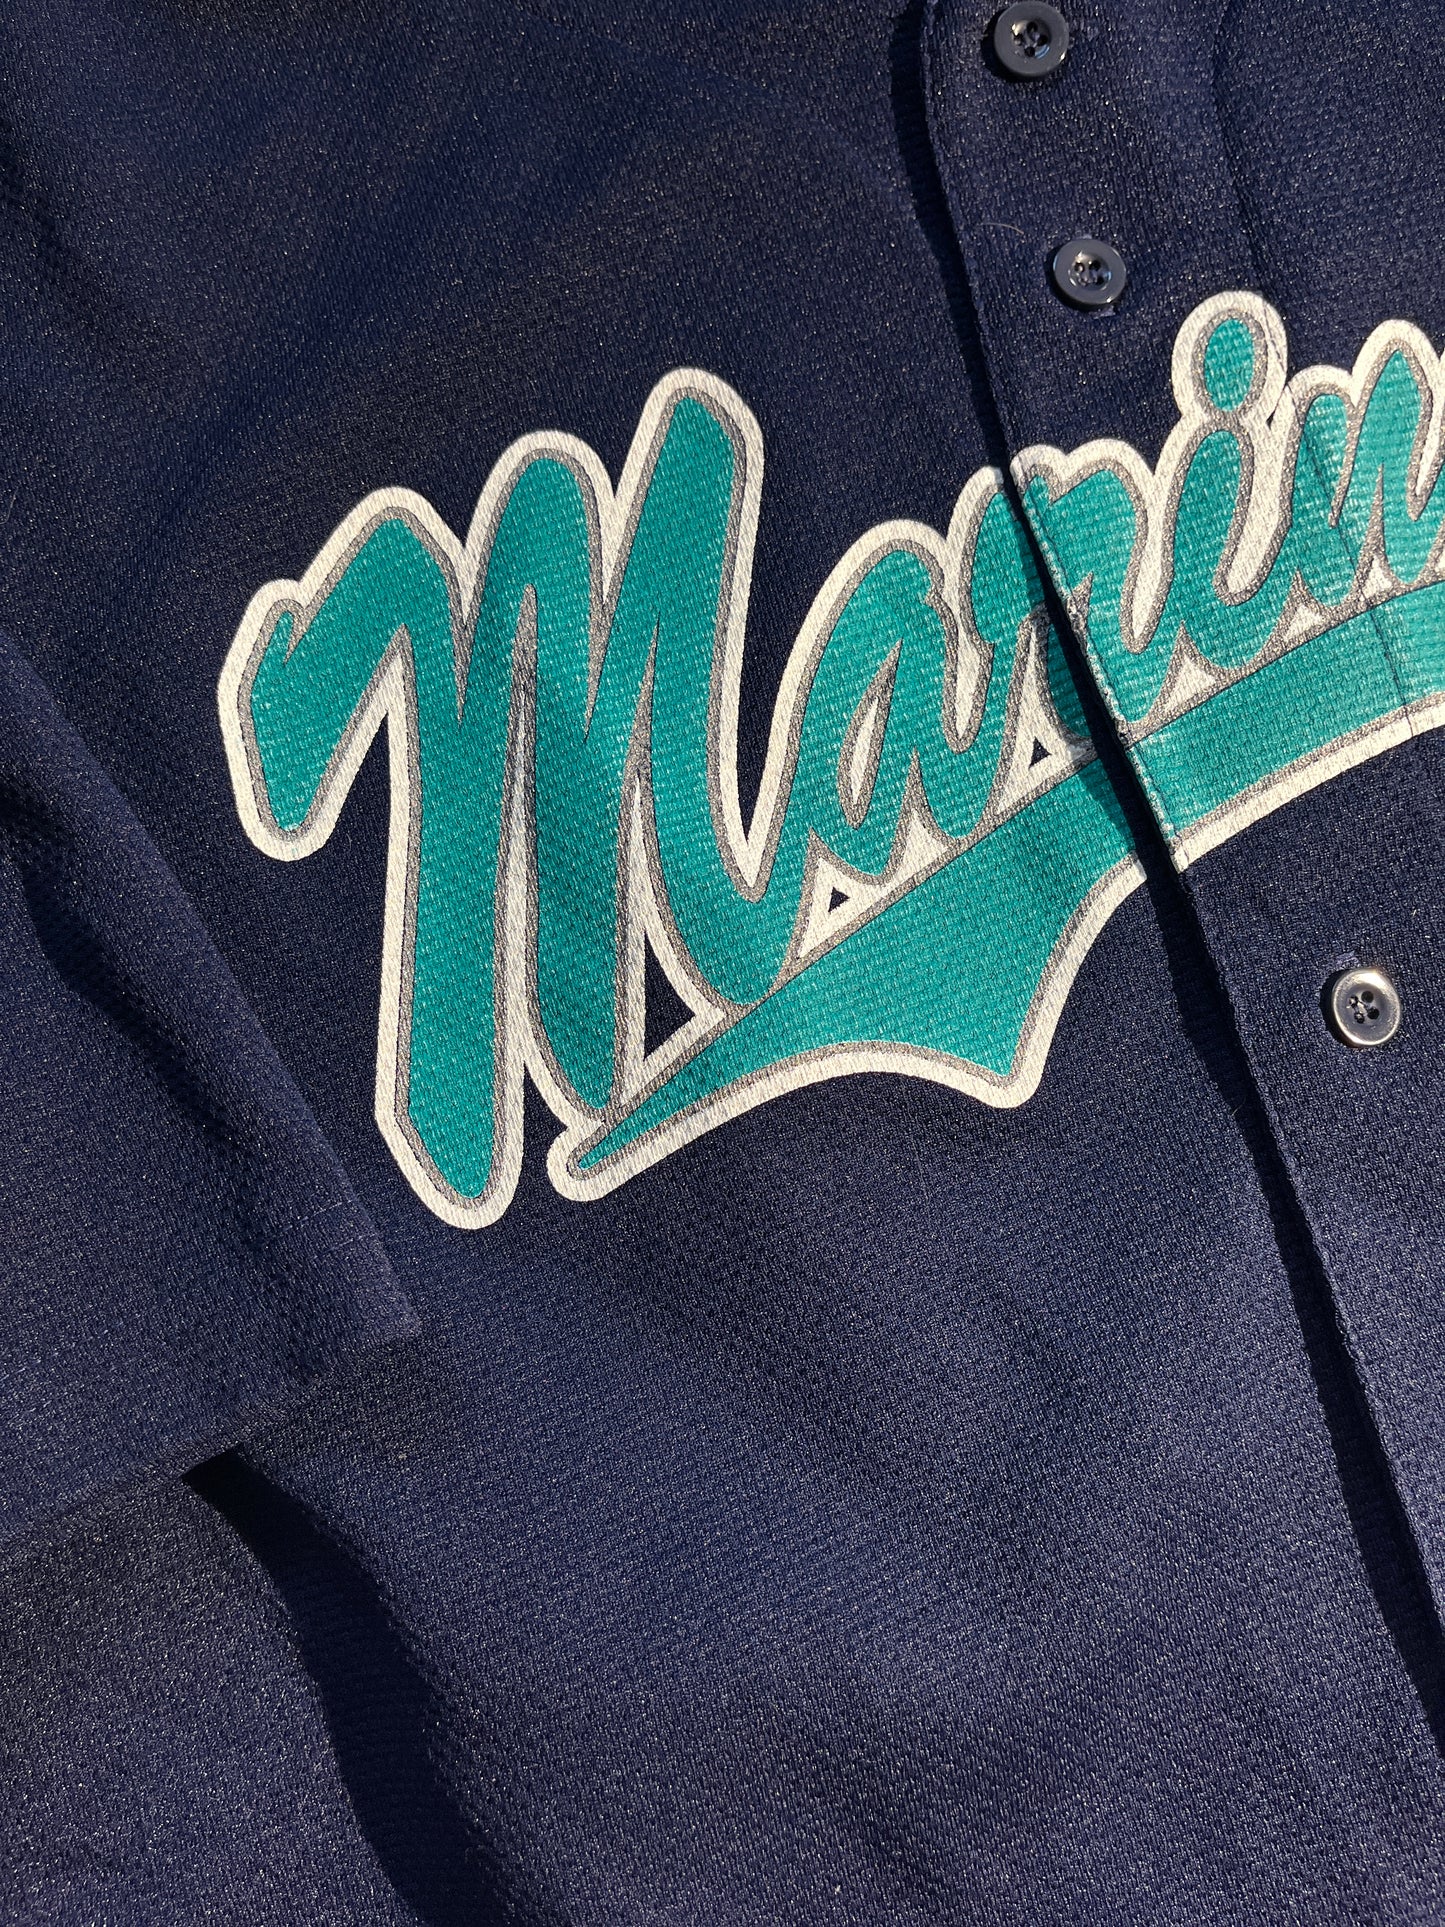 Vintage Seattle Mariners Jersey Ichiro #51